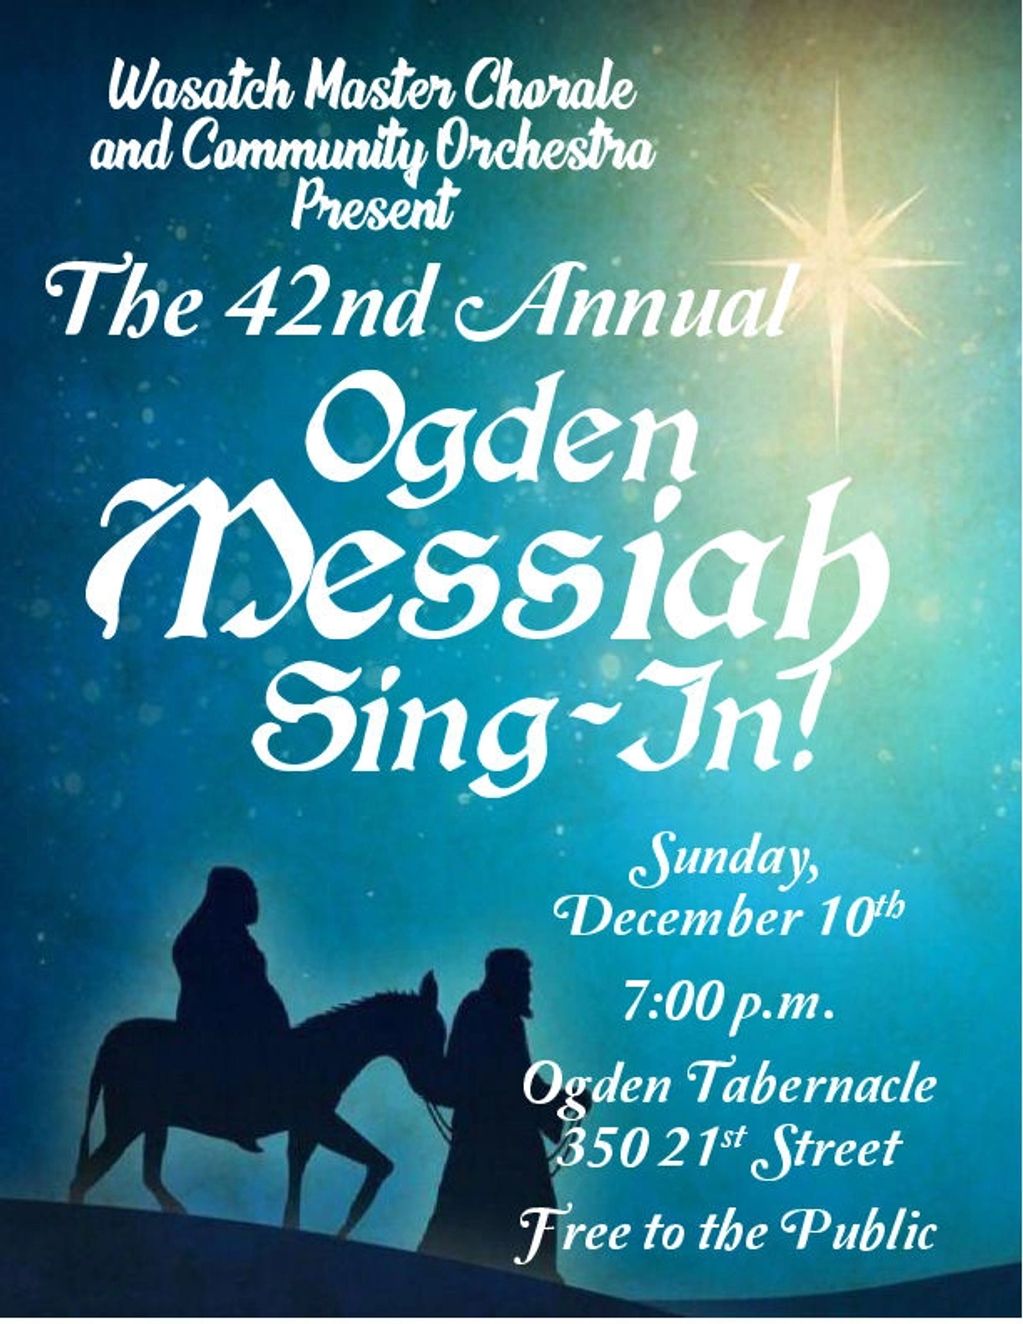 Ogden Messiah
Messiah Sing-In
Utah Messiah
Utah Messiah Sing-in
Ogden Messiah Sing-in
Ogden Tabernac